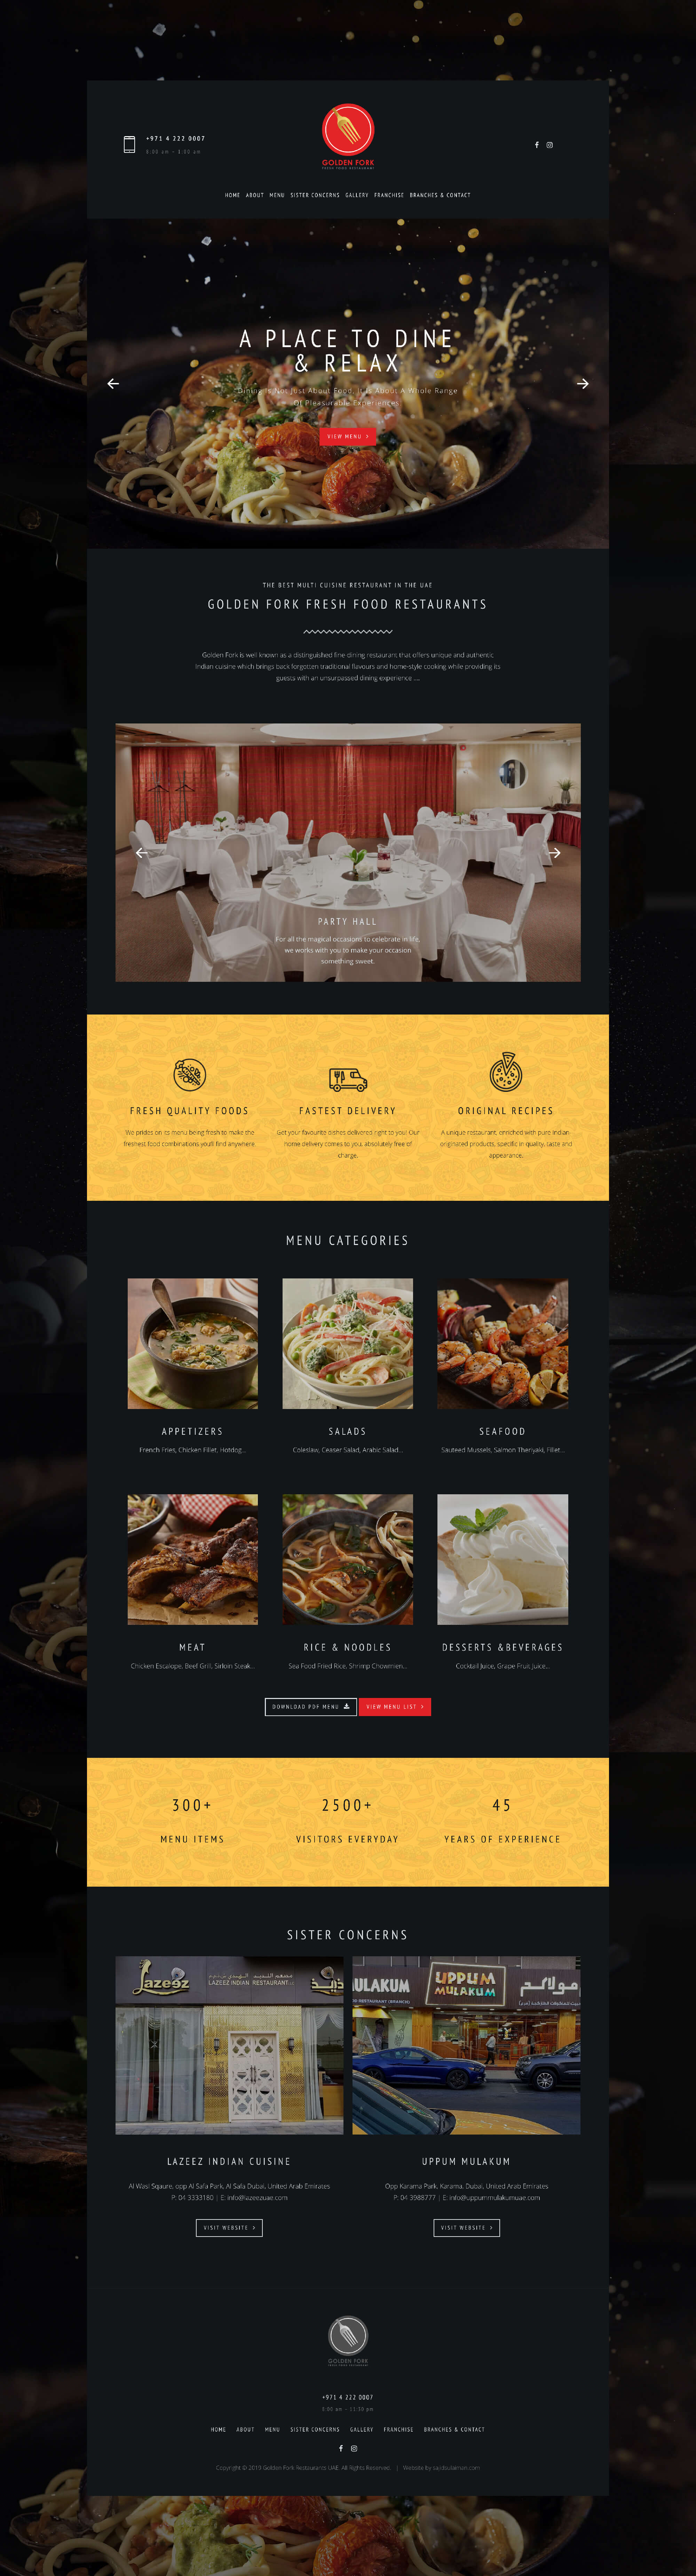 Golden Fork Restaurant website by Sajid Sulaiman Freelance Website Designer Dubai